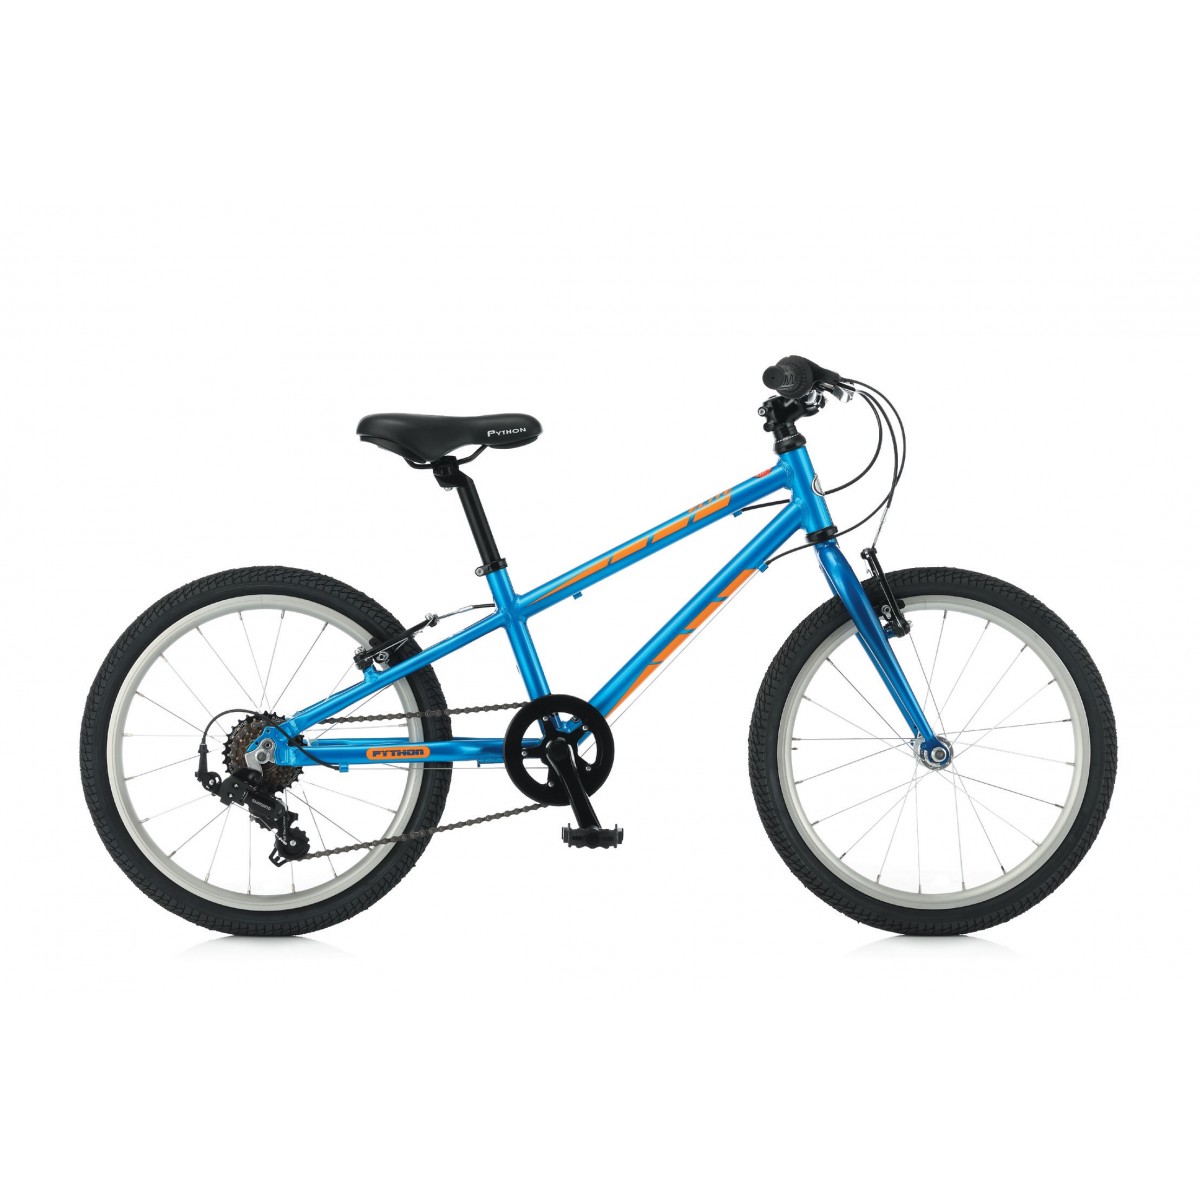 lightweight 20 inch bike